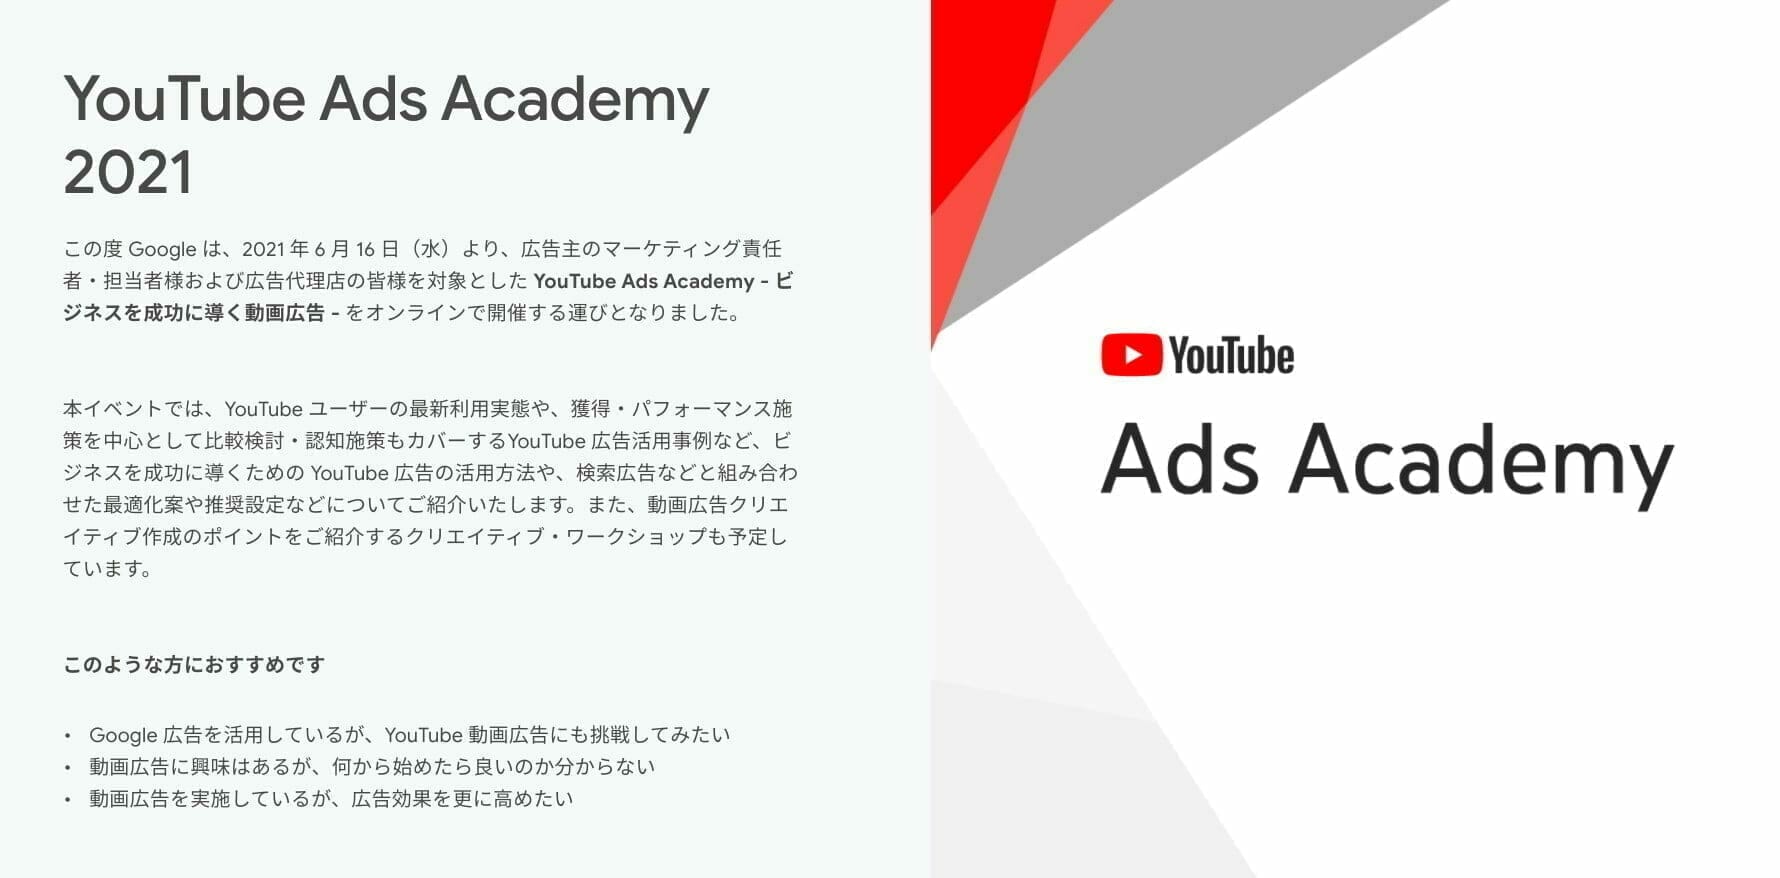 [Google 広告] YouTube Ads Academy 2021